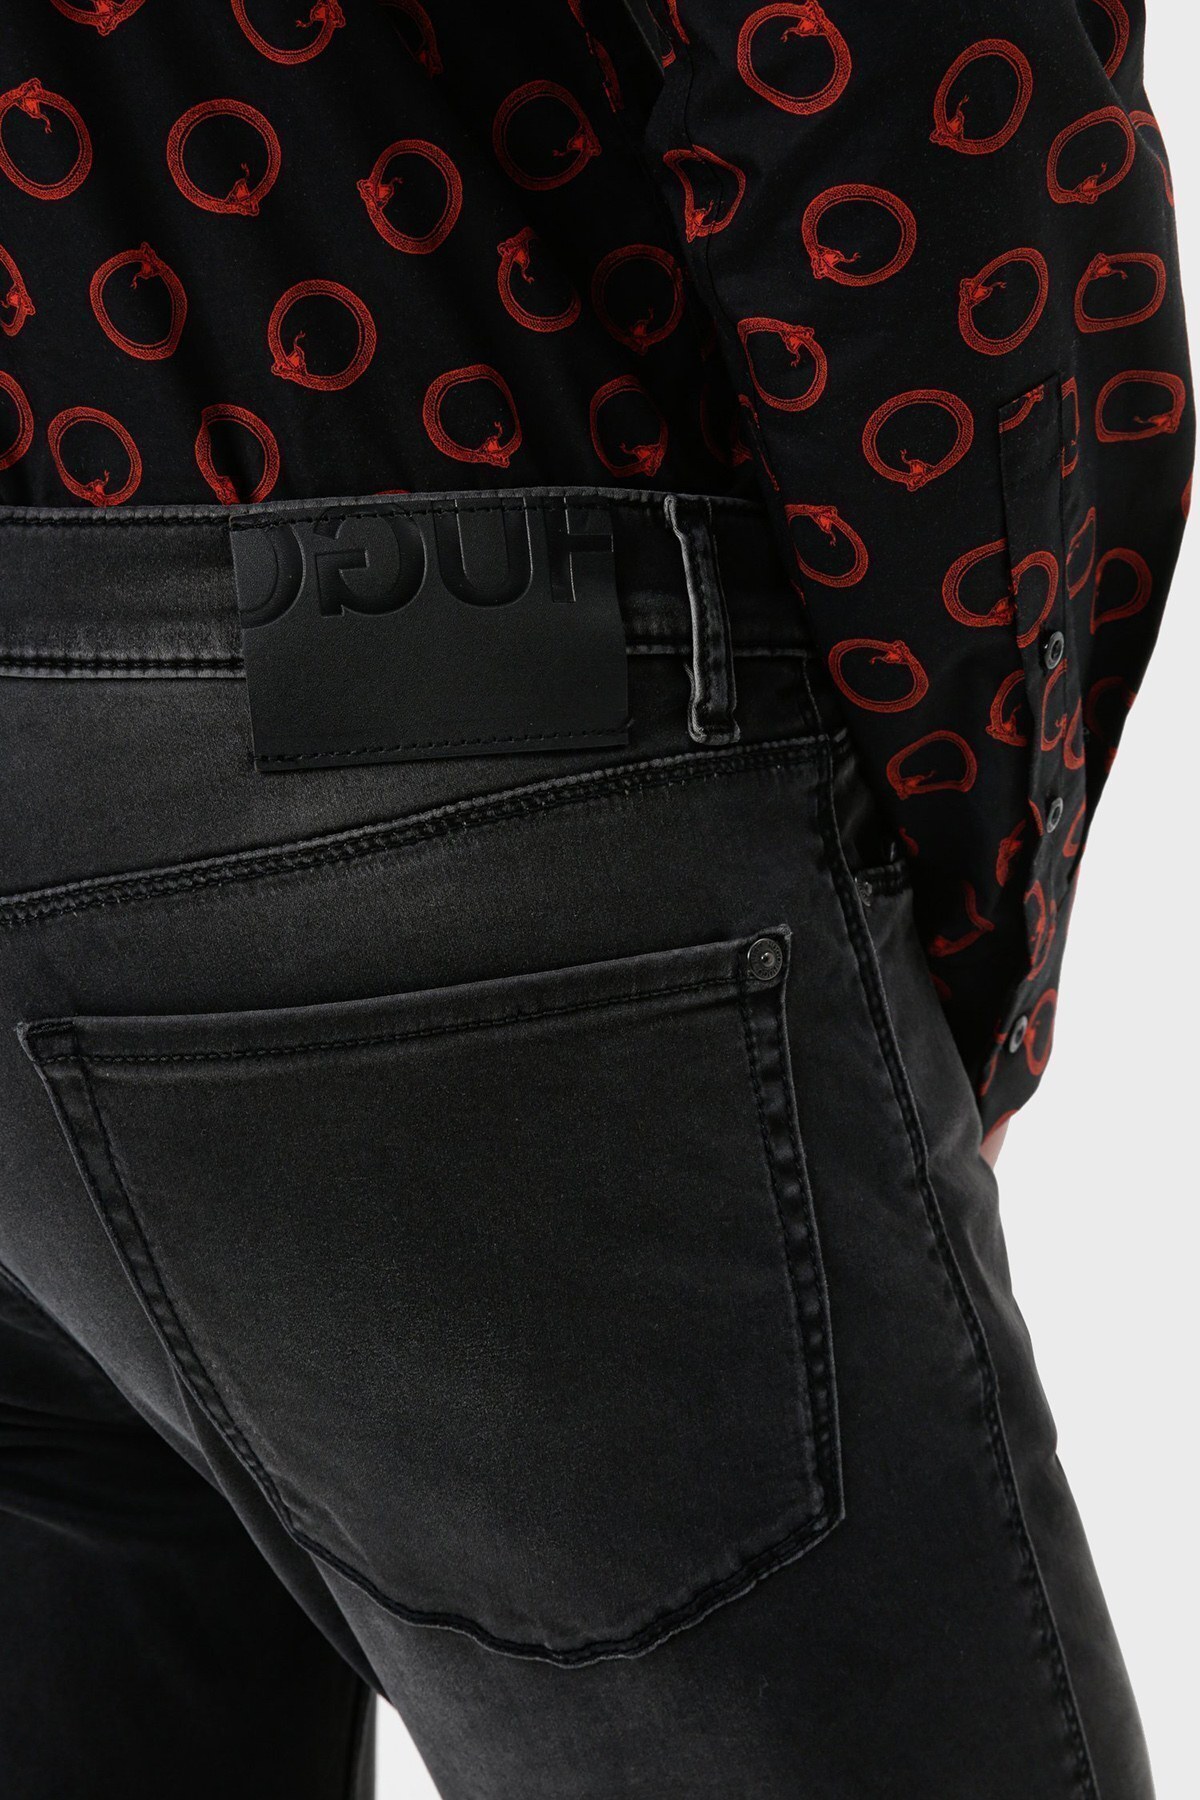 Hugo Boss Pamuklu Slim Fit Jeans Erkek Kot Pantolon 50459811 021 ANTRASİT